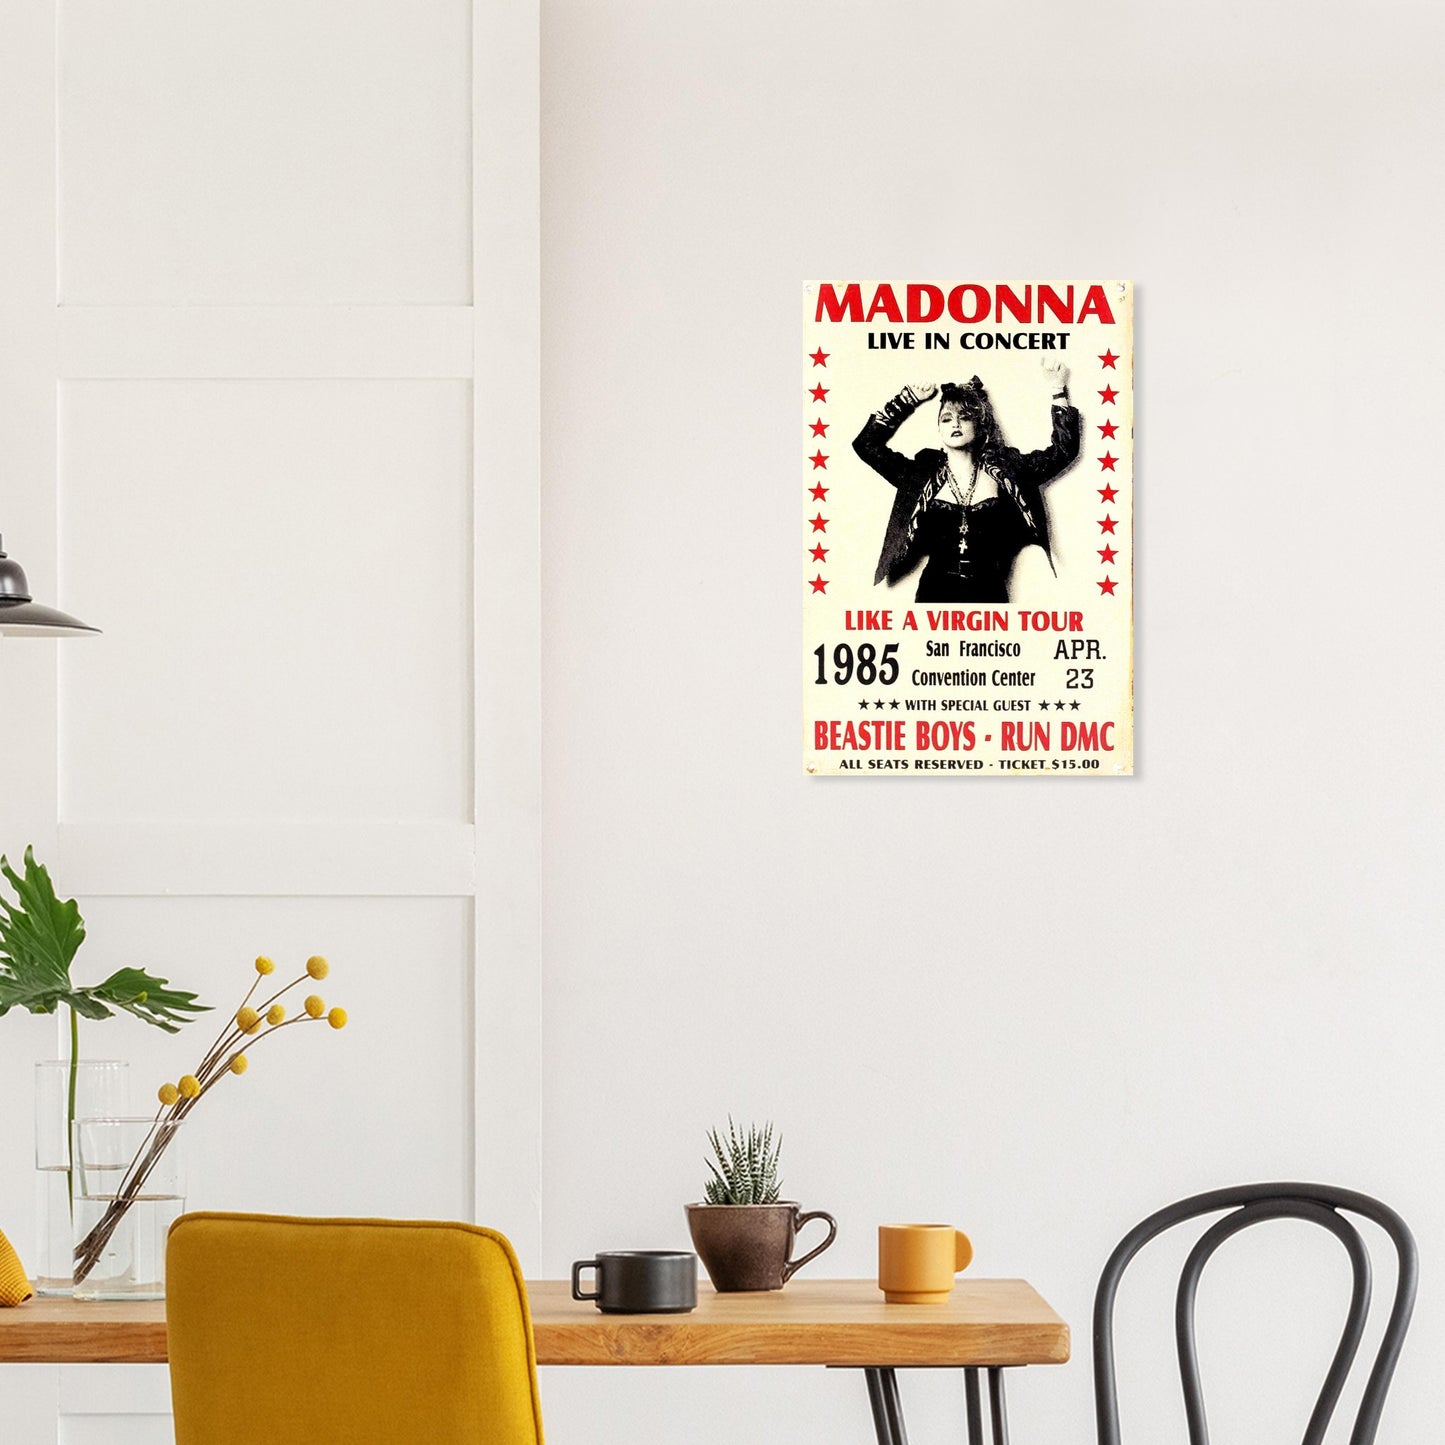 Madonna Vintage Poster Reprint on Premium Matte Paper - Posterify